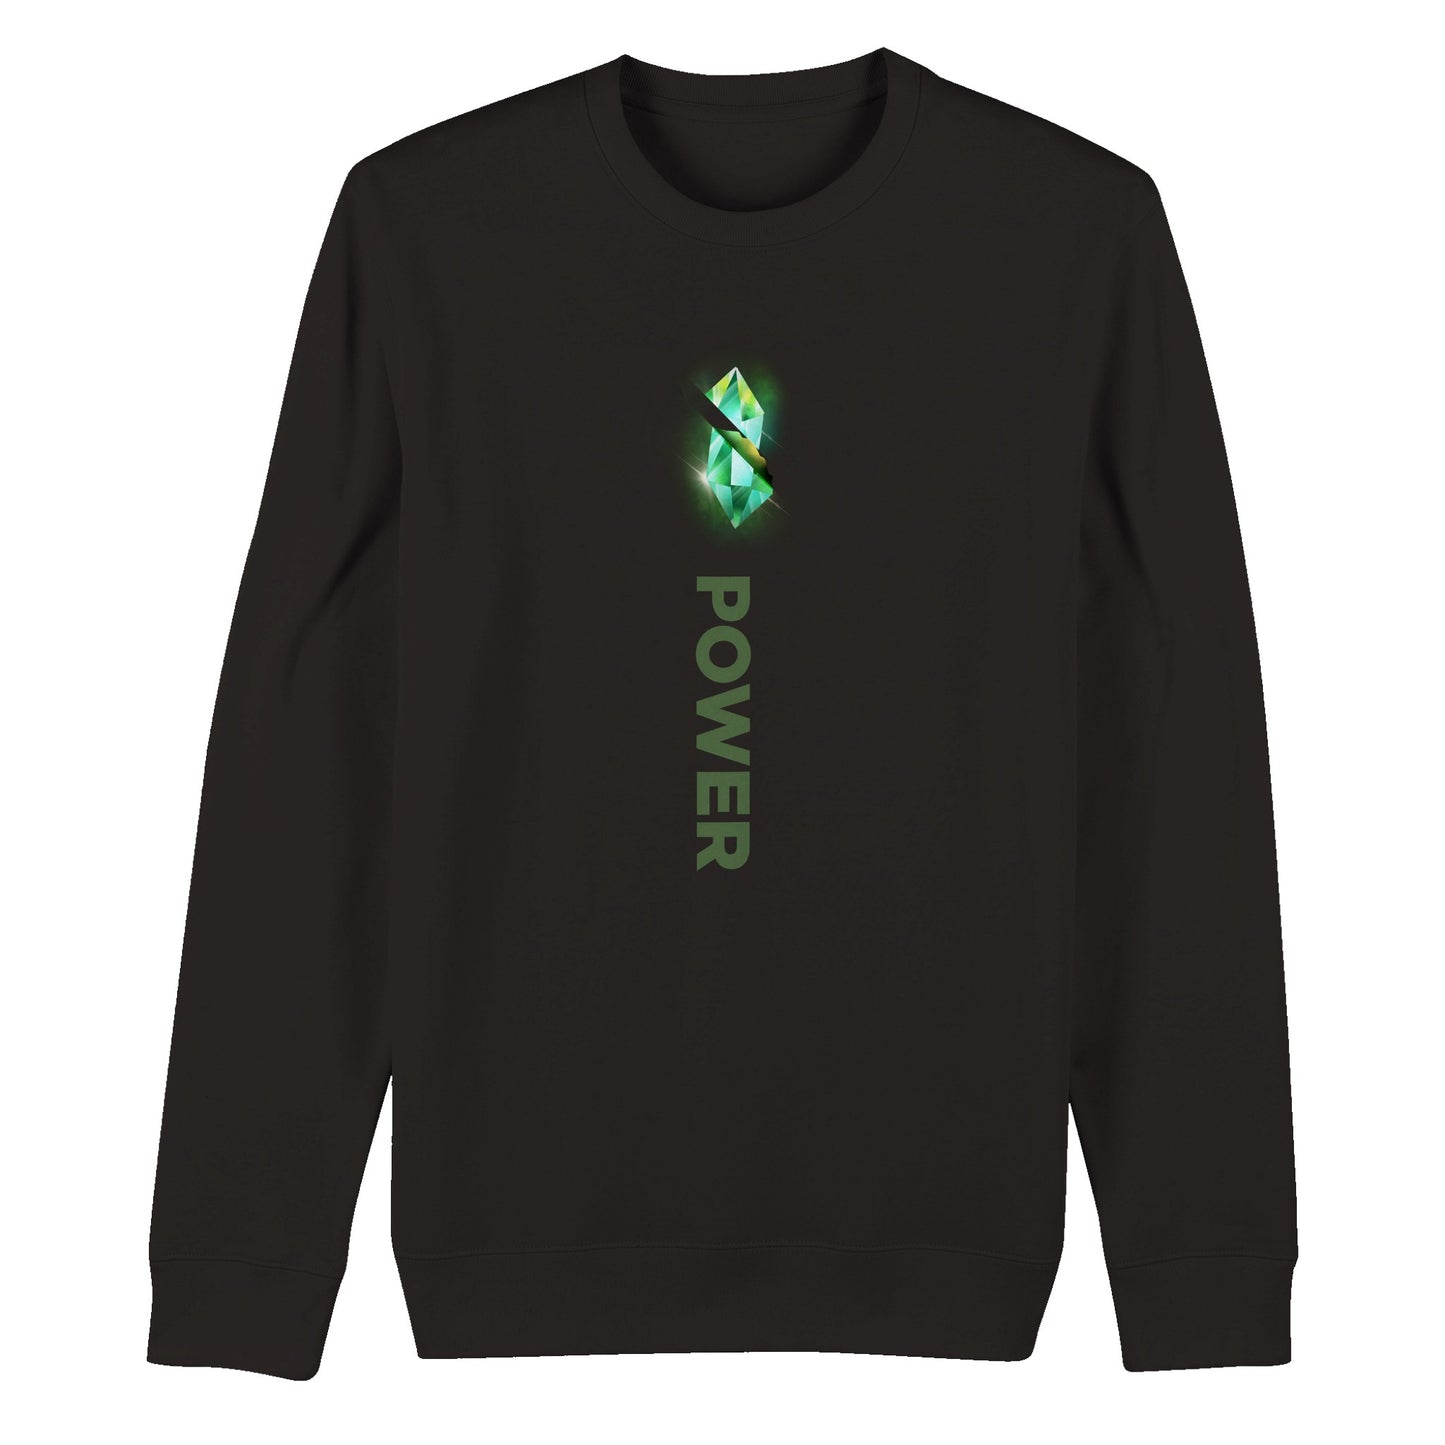 POWER & SPIRIT - Organic Unisex Crewneck Sweatshirt